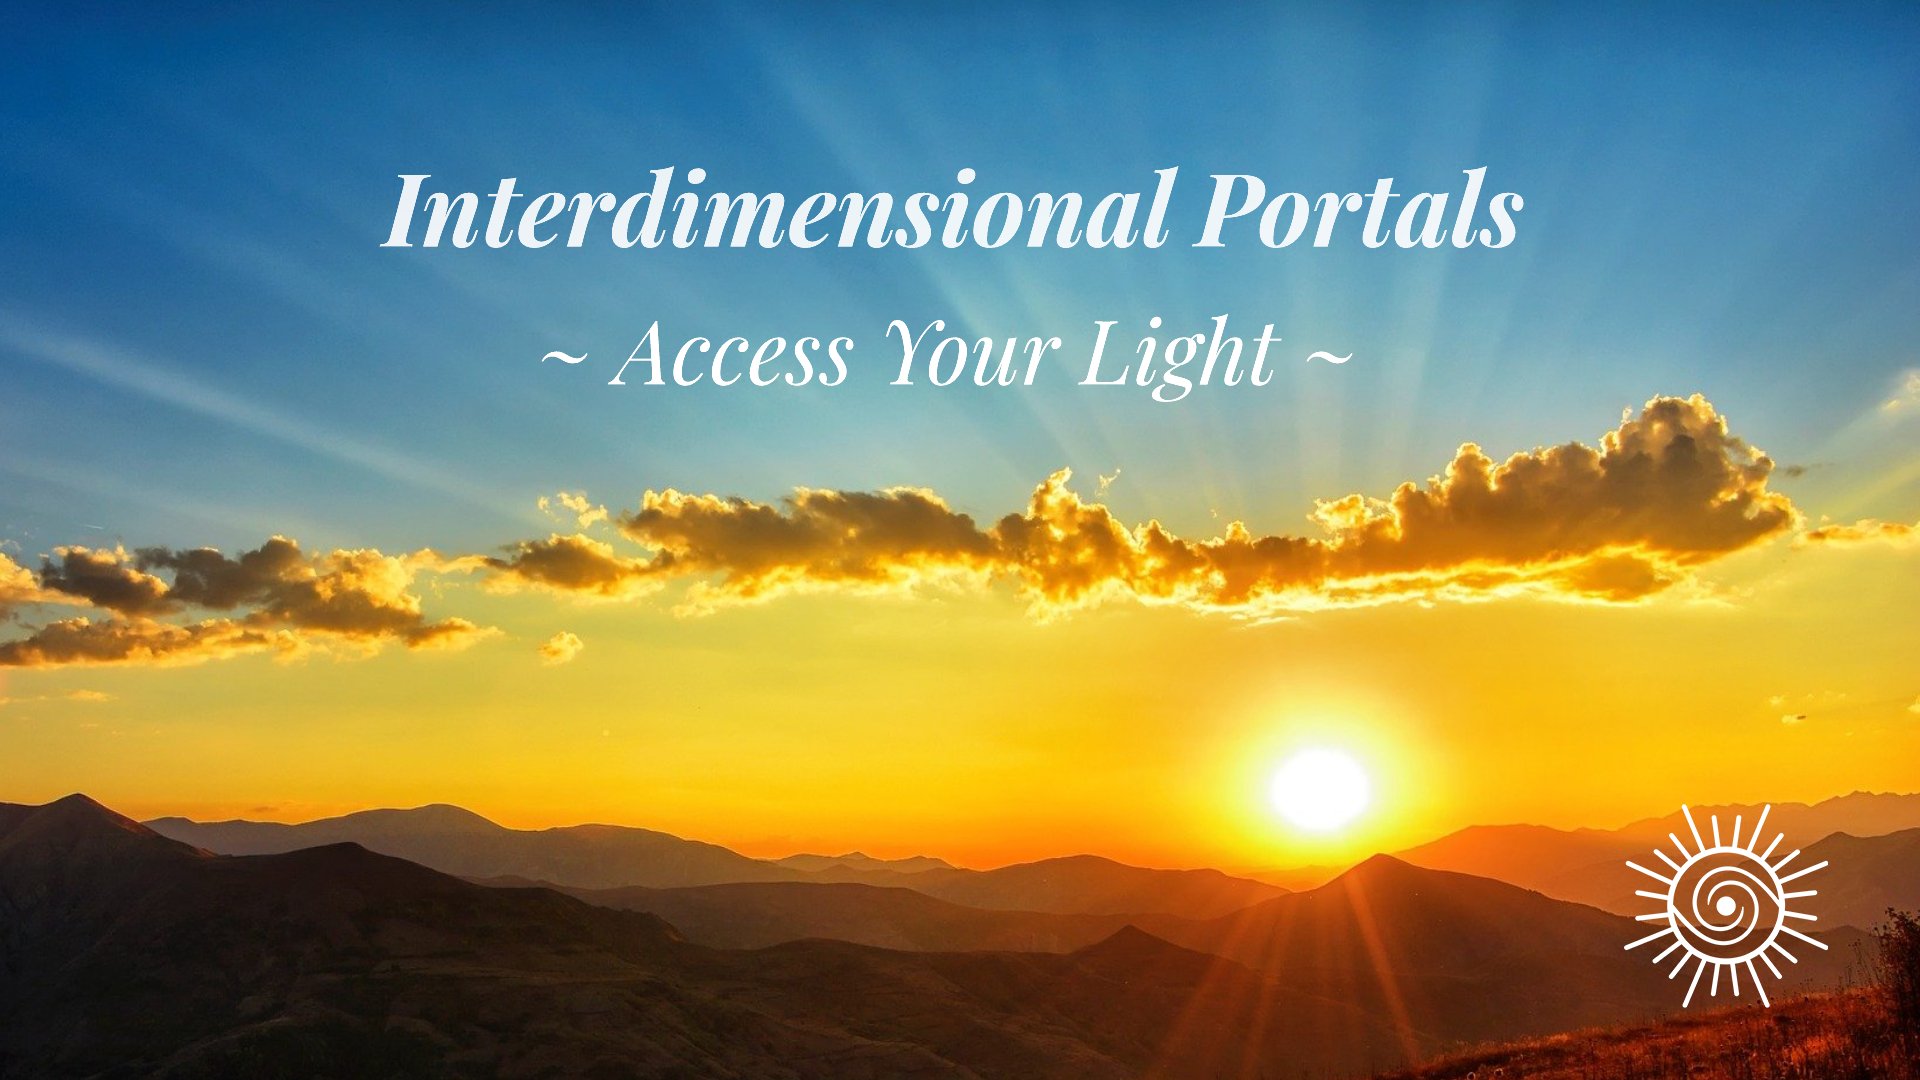 Interdimensional Portals - Access Your Light